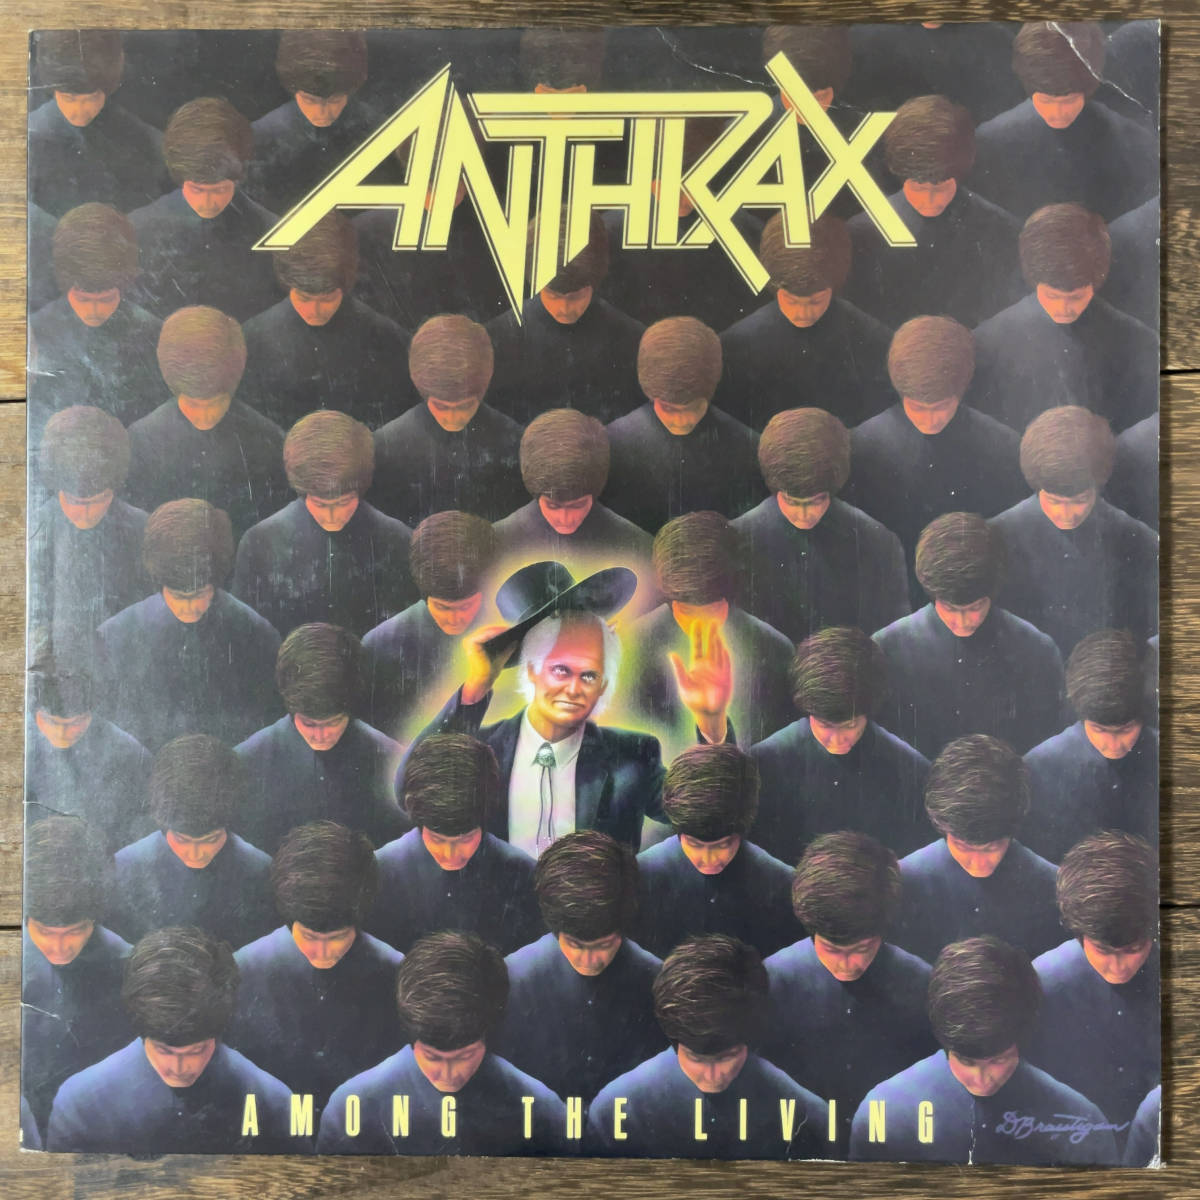 Yahoo!オークション -「anthrax among the living」の落札相場・落札価格